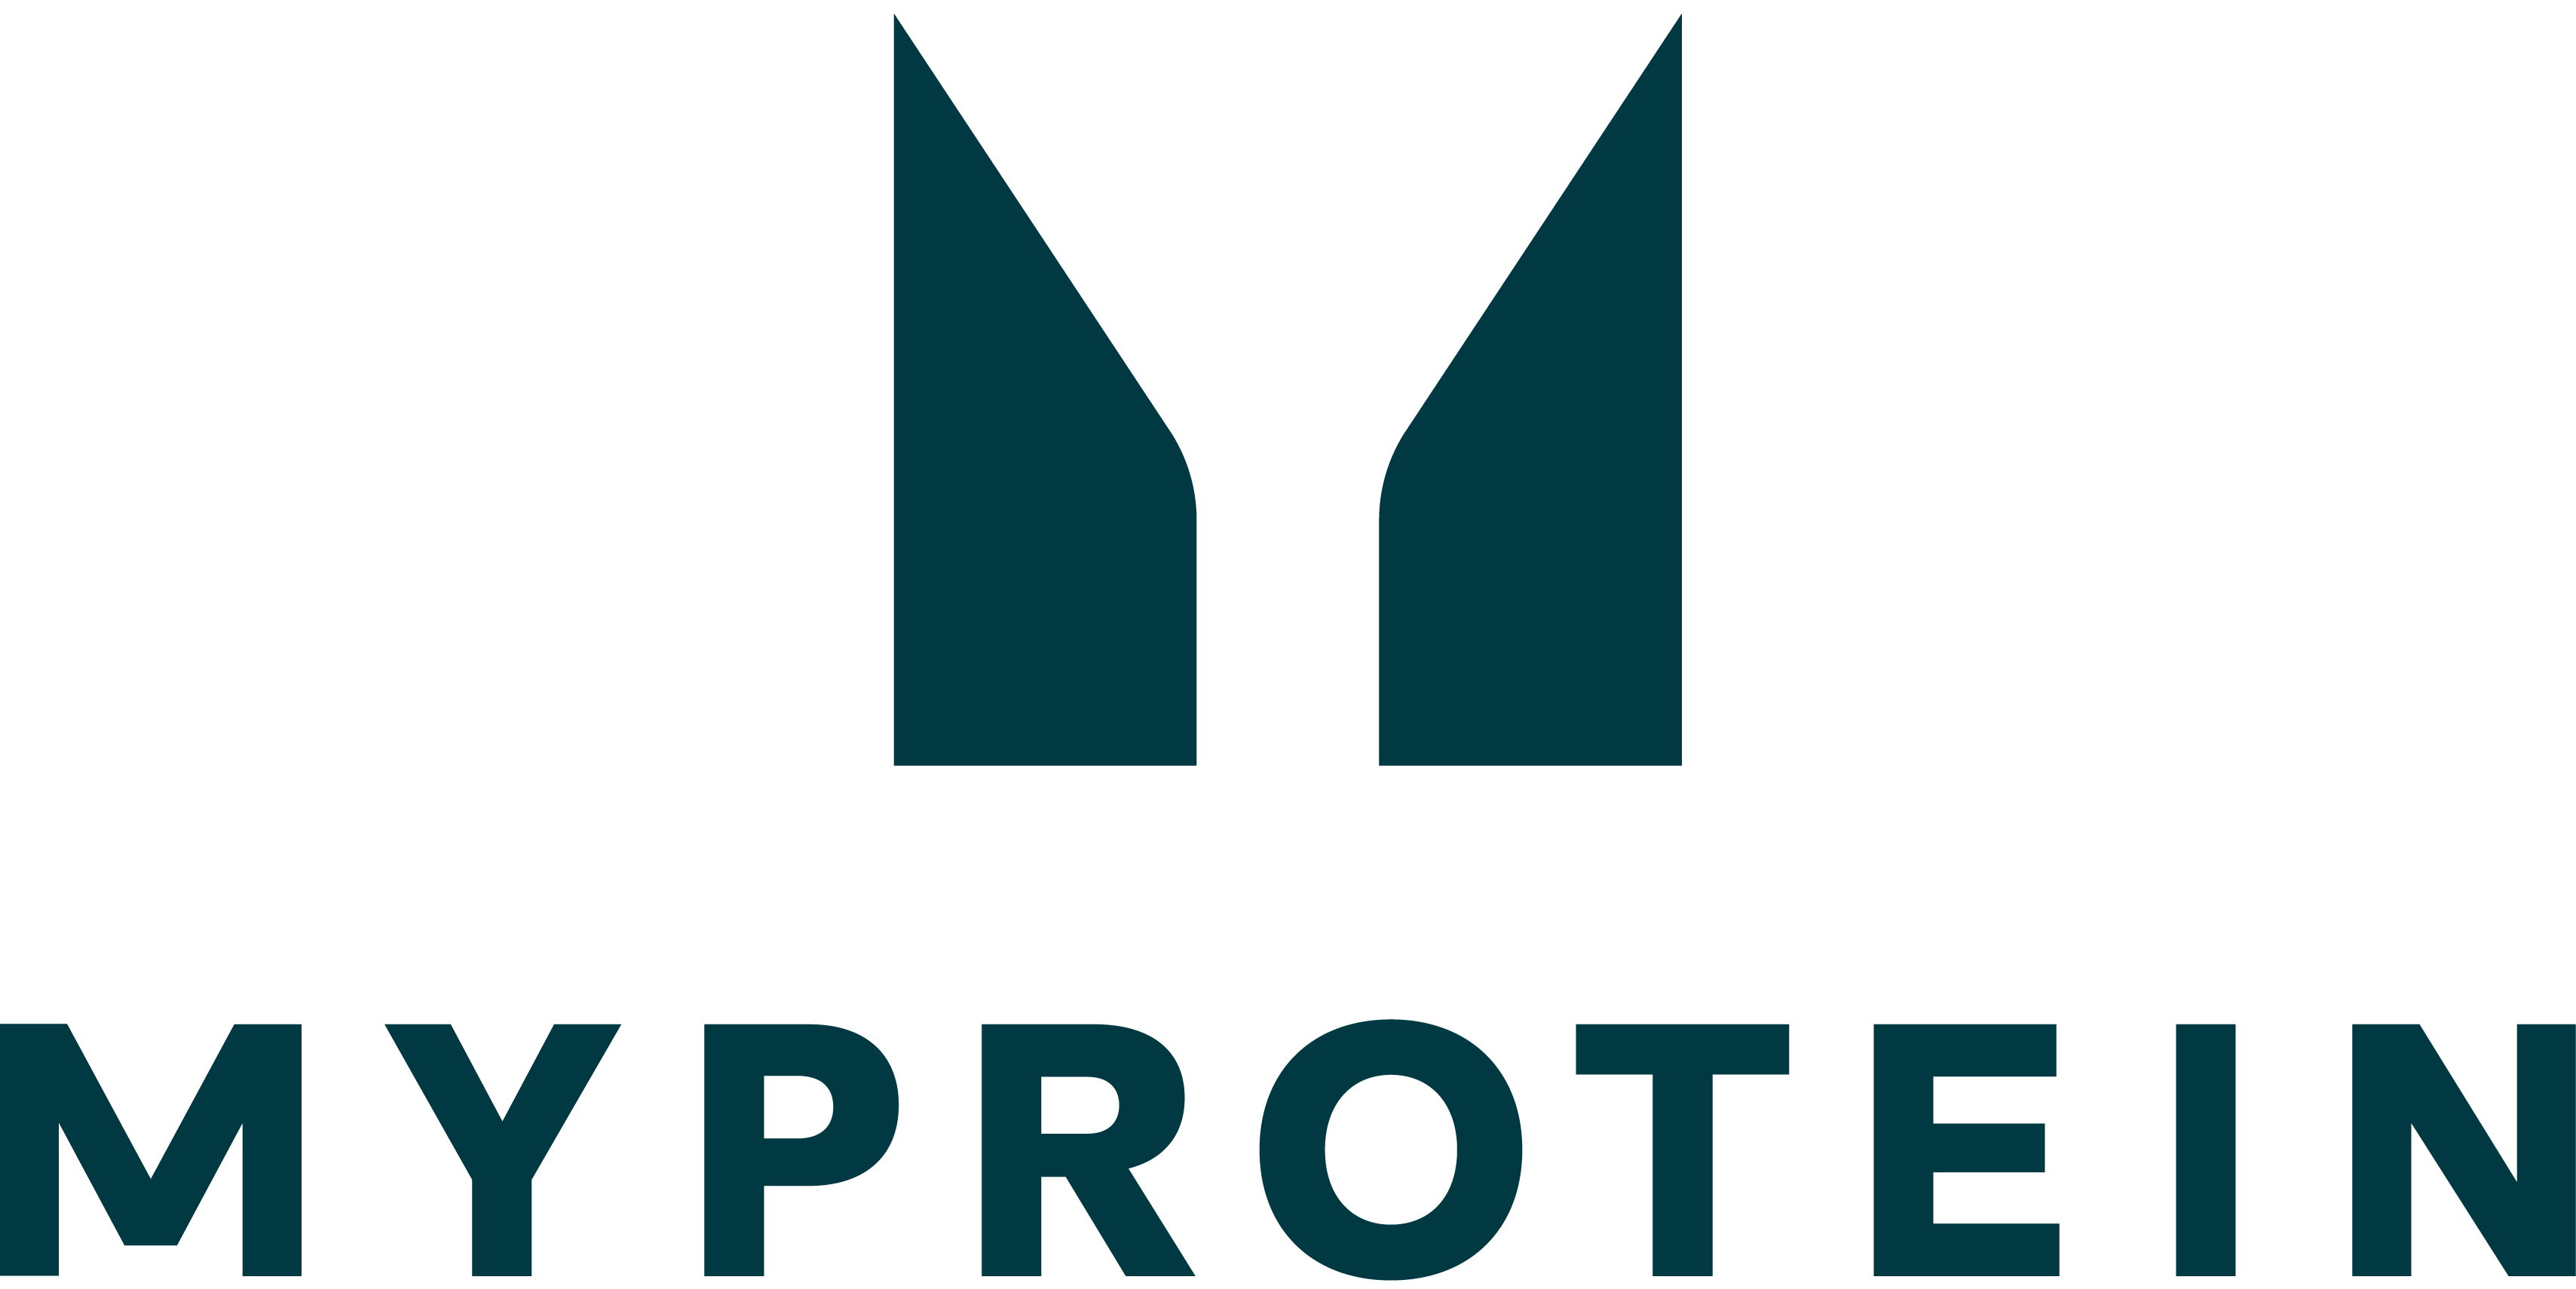 My Protein logo